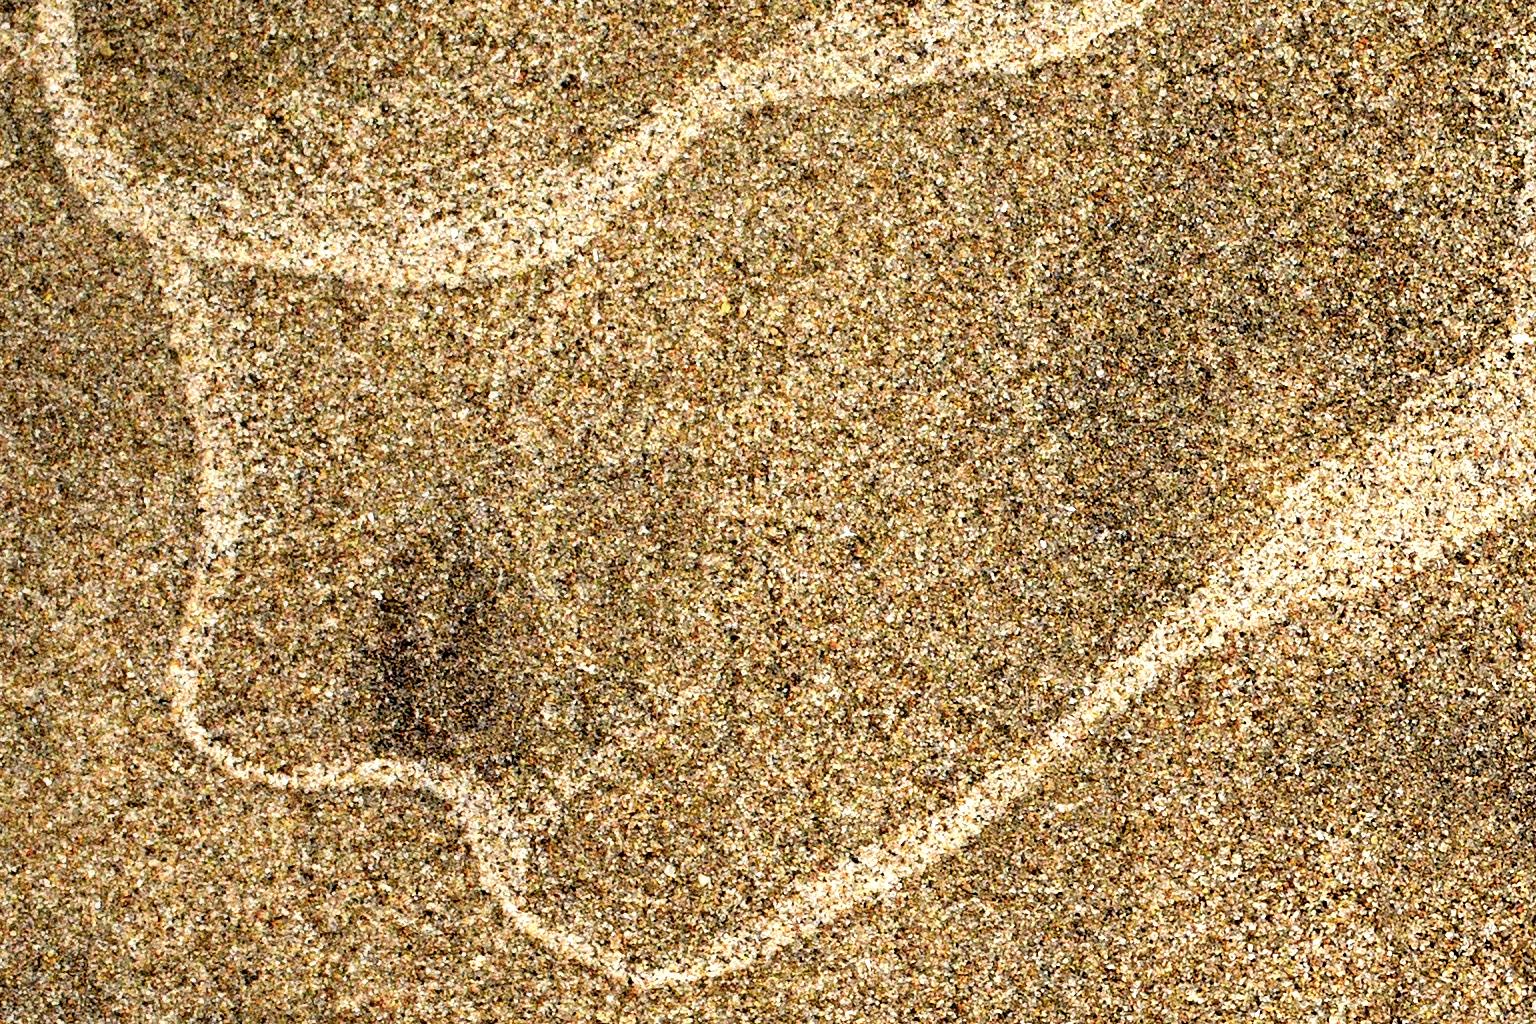 Sand No. 3 - Brown Still-Life Photograph by Chris Thomaidis